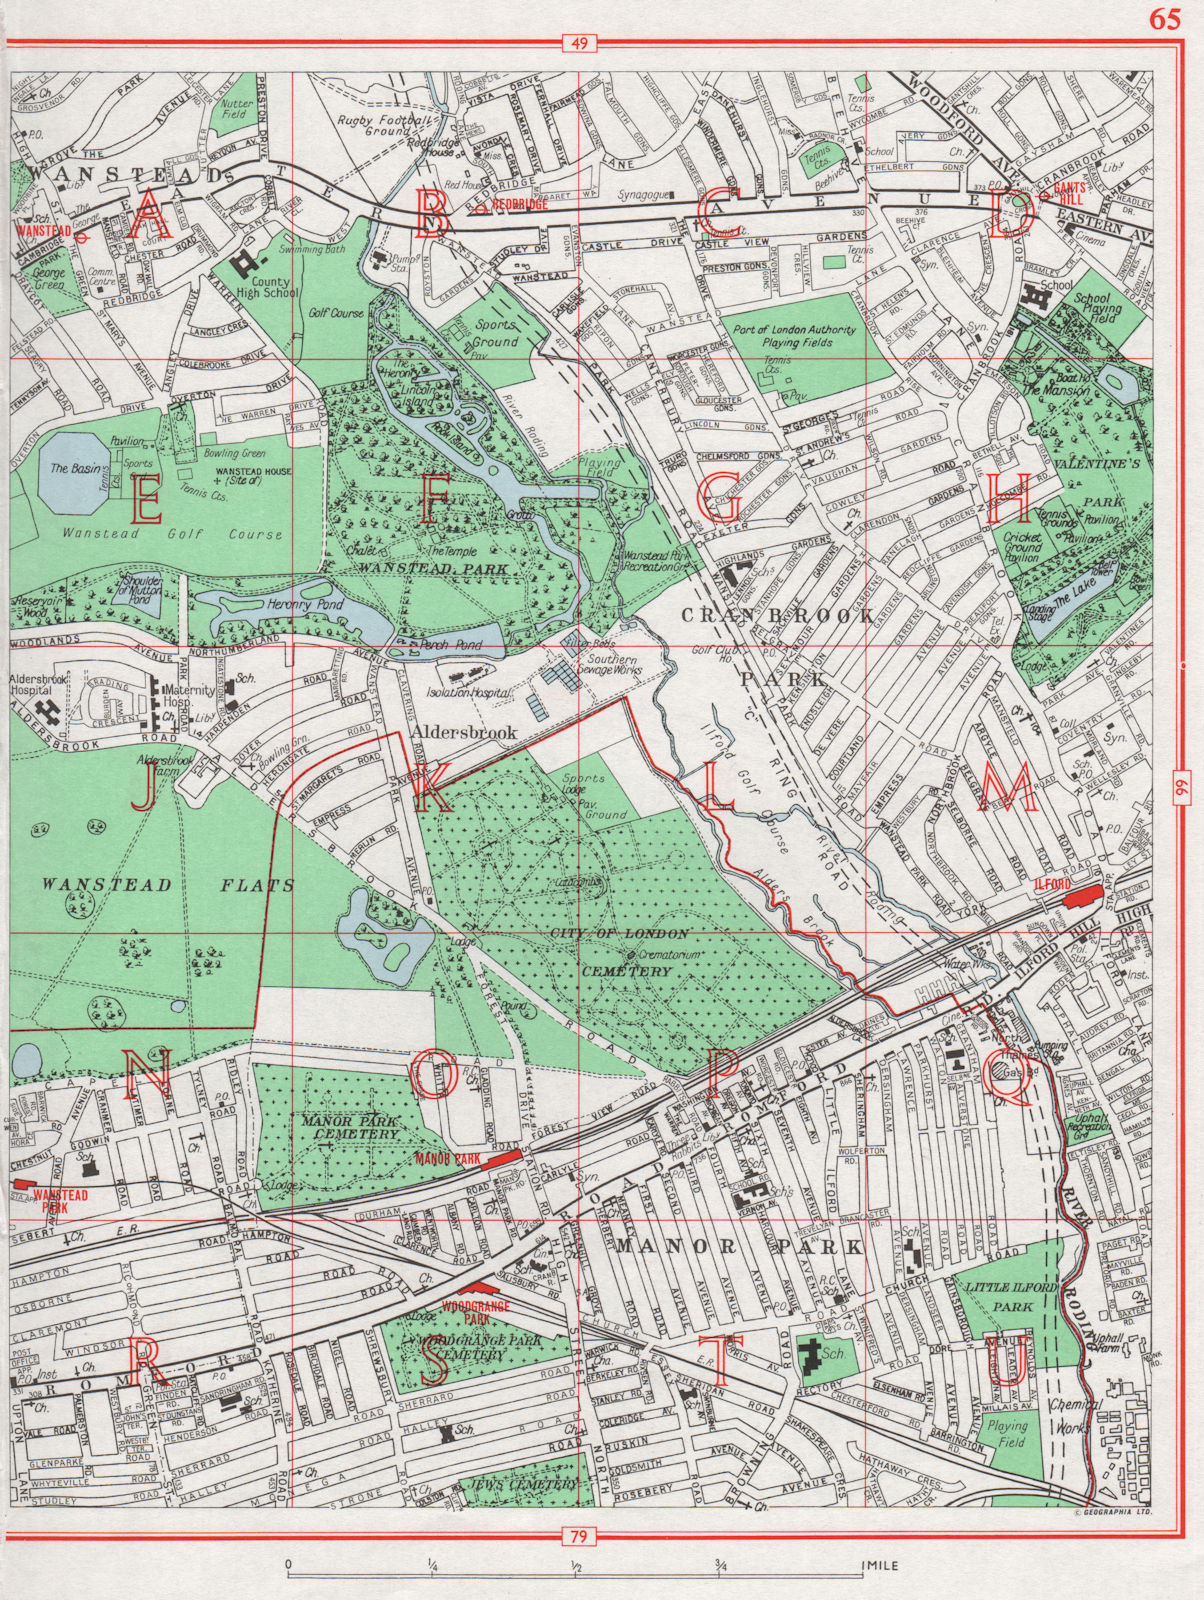 WANSTEAD. Wanstead Flats Cranbrook Park Aldersbrook Manor Park Ilford 1964 map